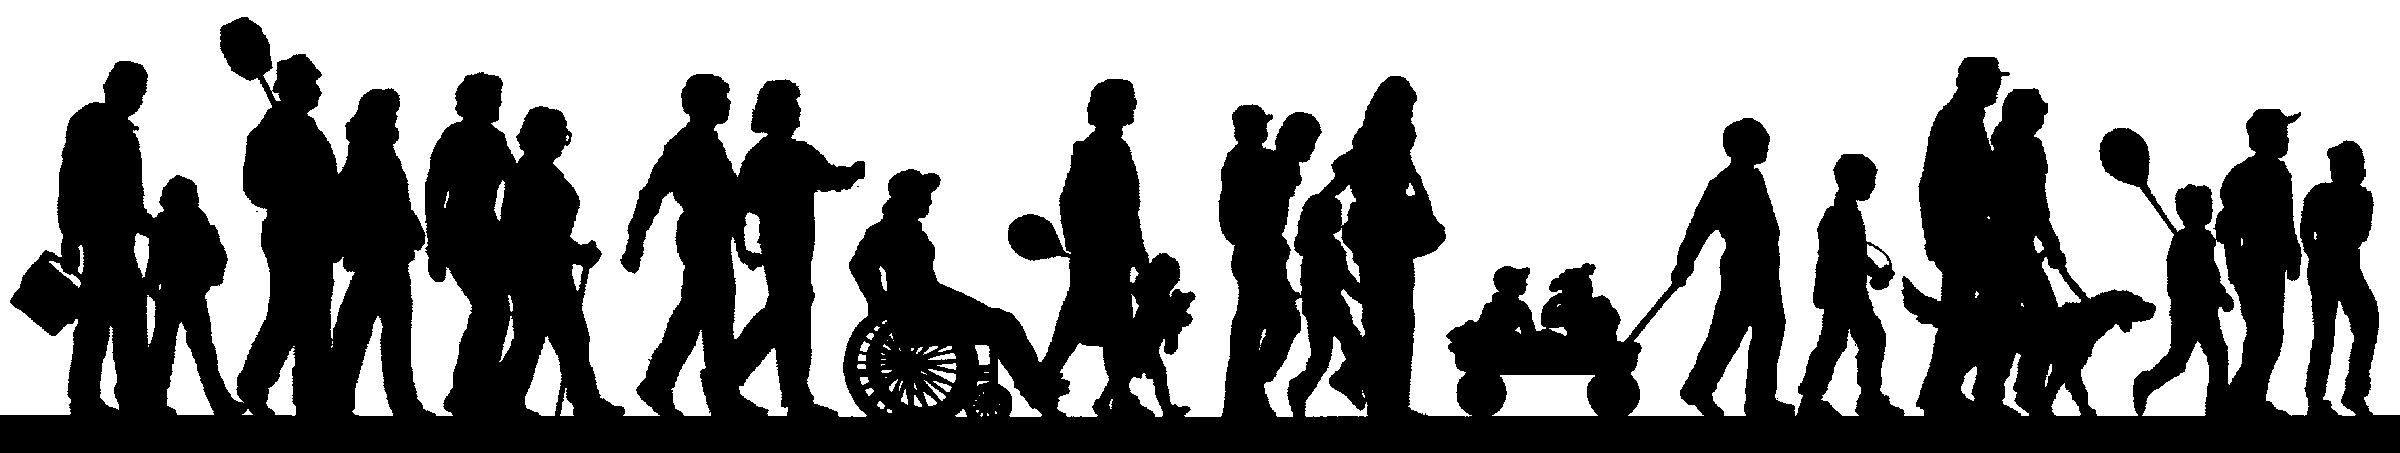 free clipart family walking - photo #38